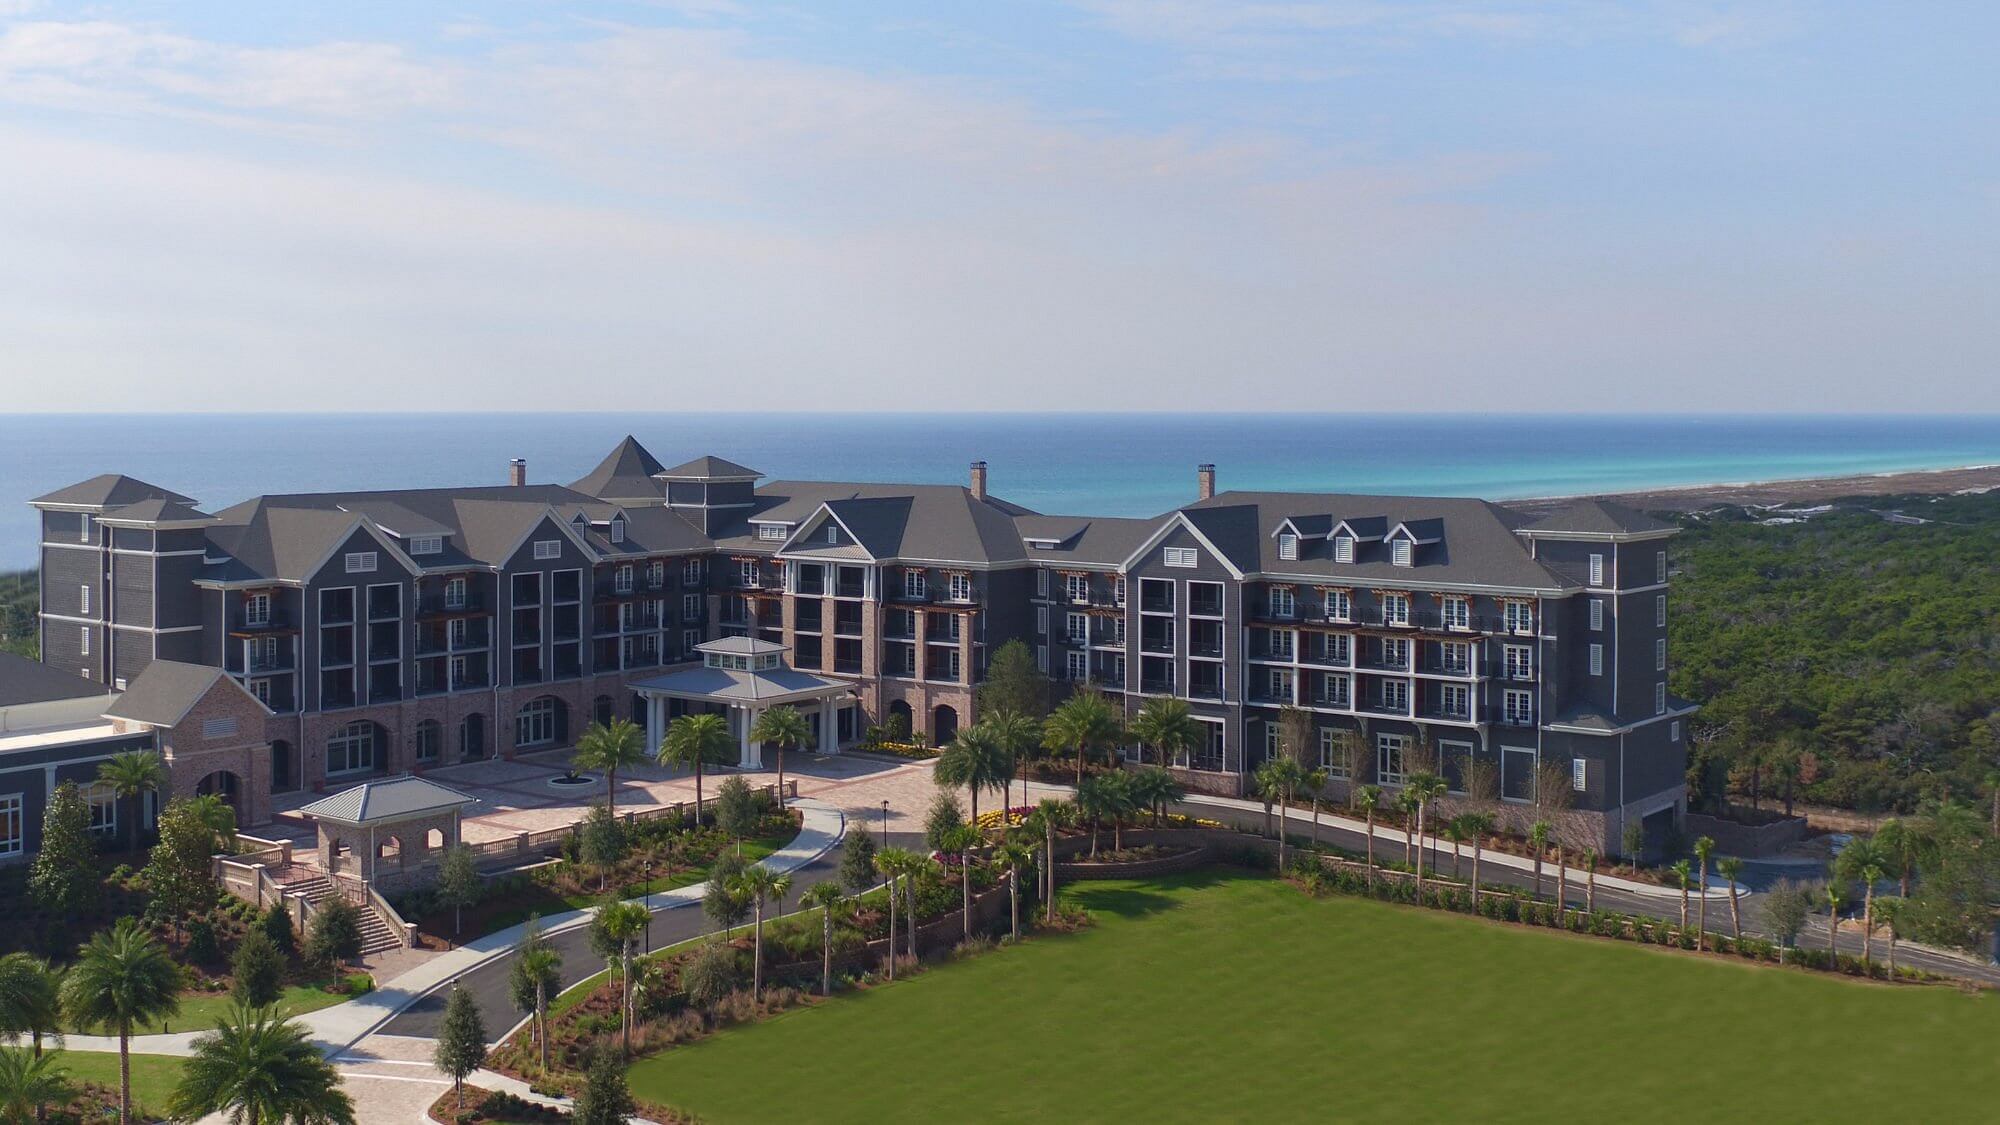 8 Best All-Inclusive Resorts in Destin, Florida